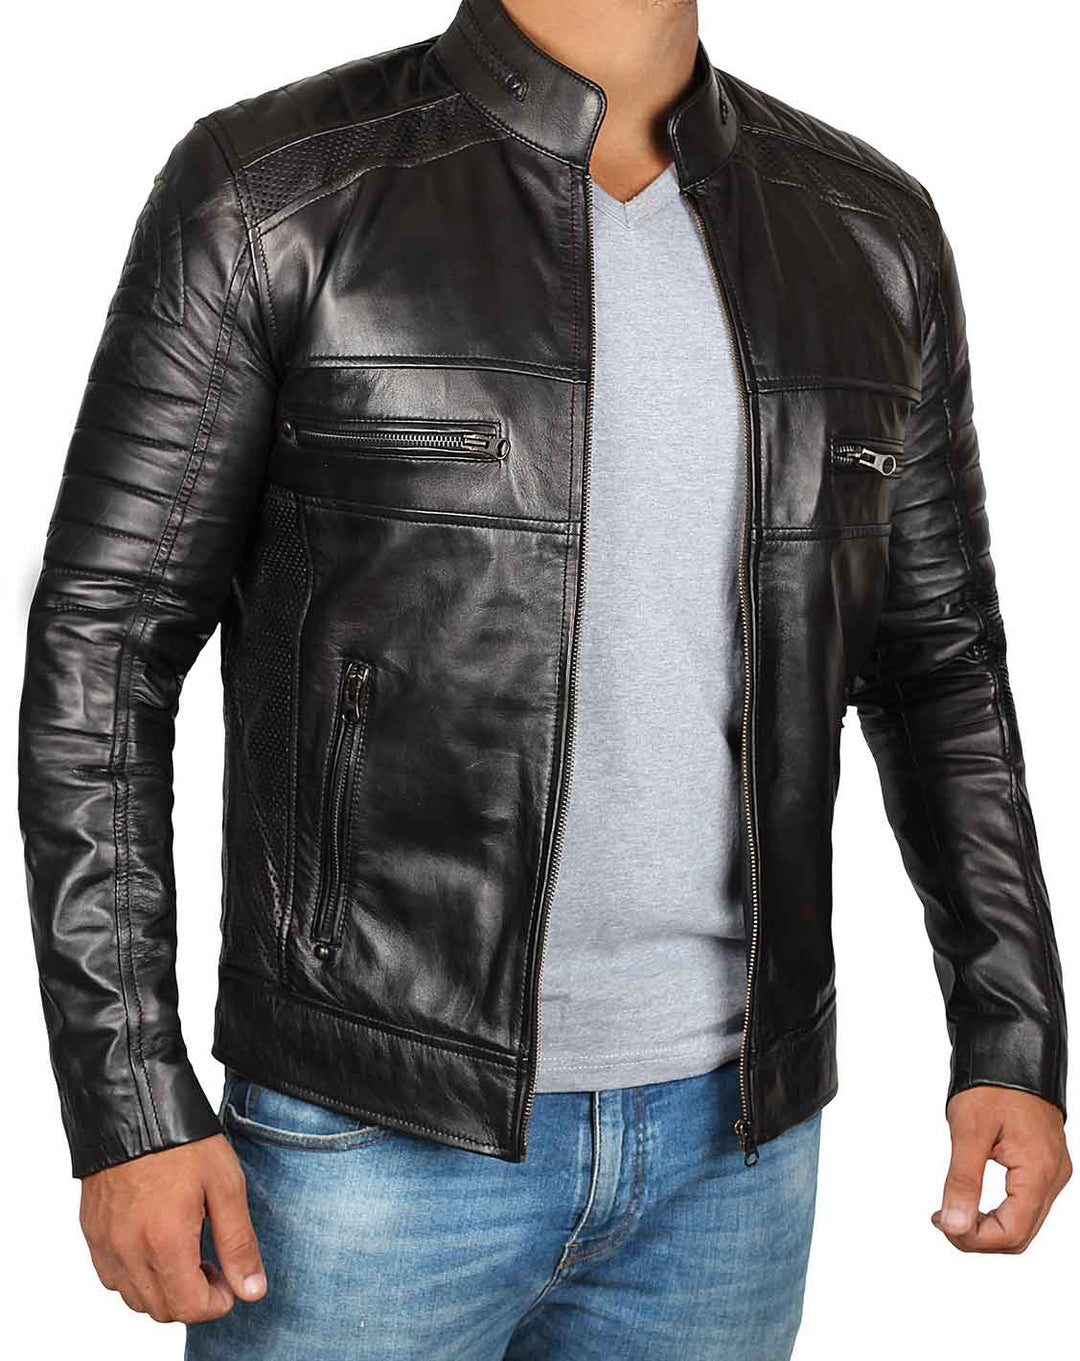 Austin Mens Black Cafe Racer Style Leather Jacket